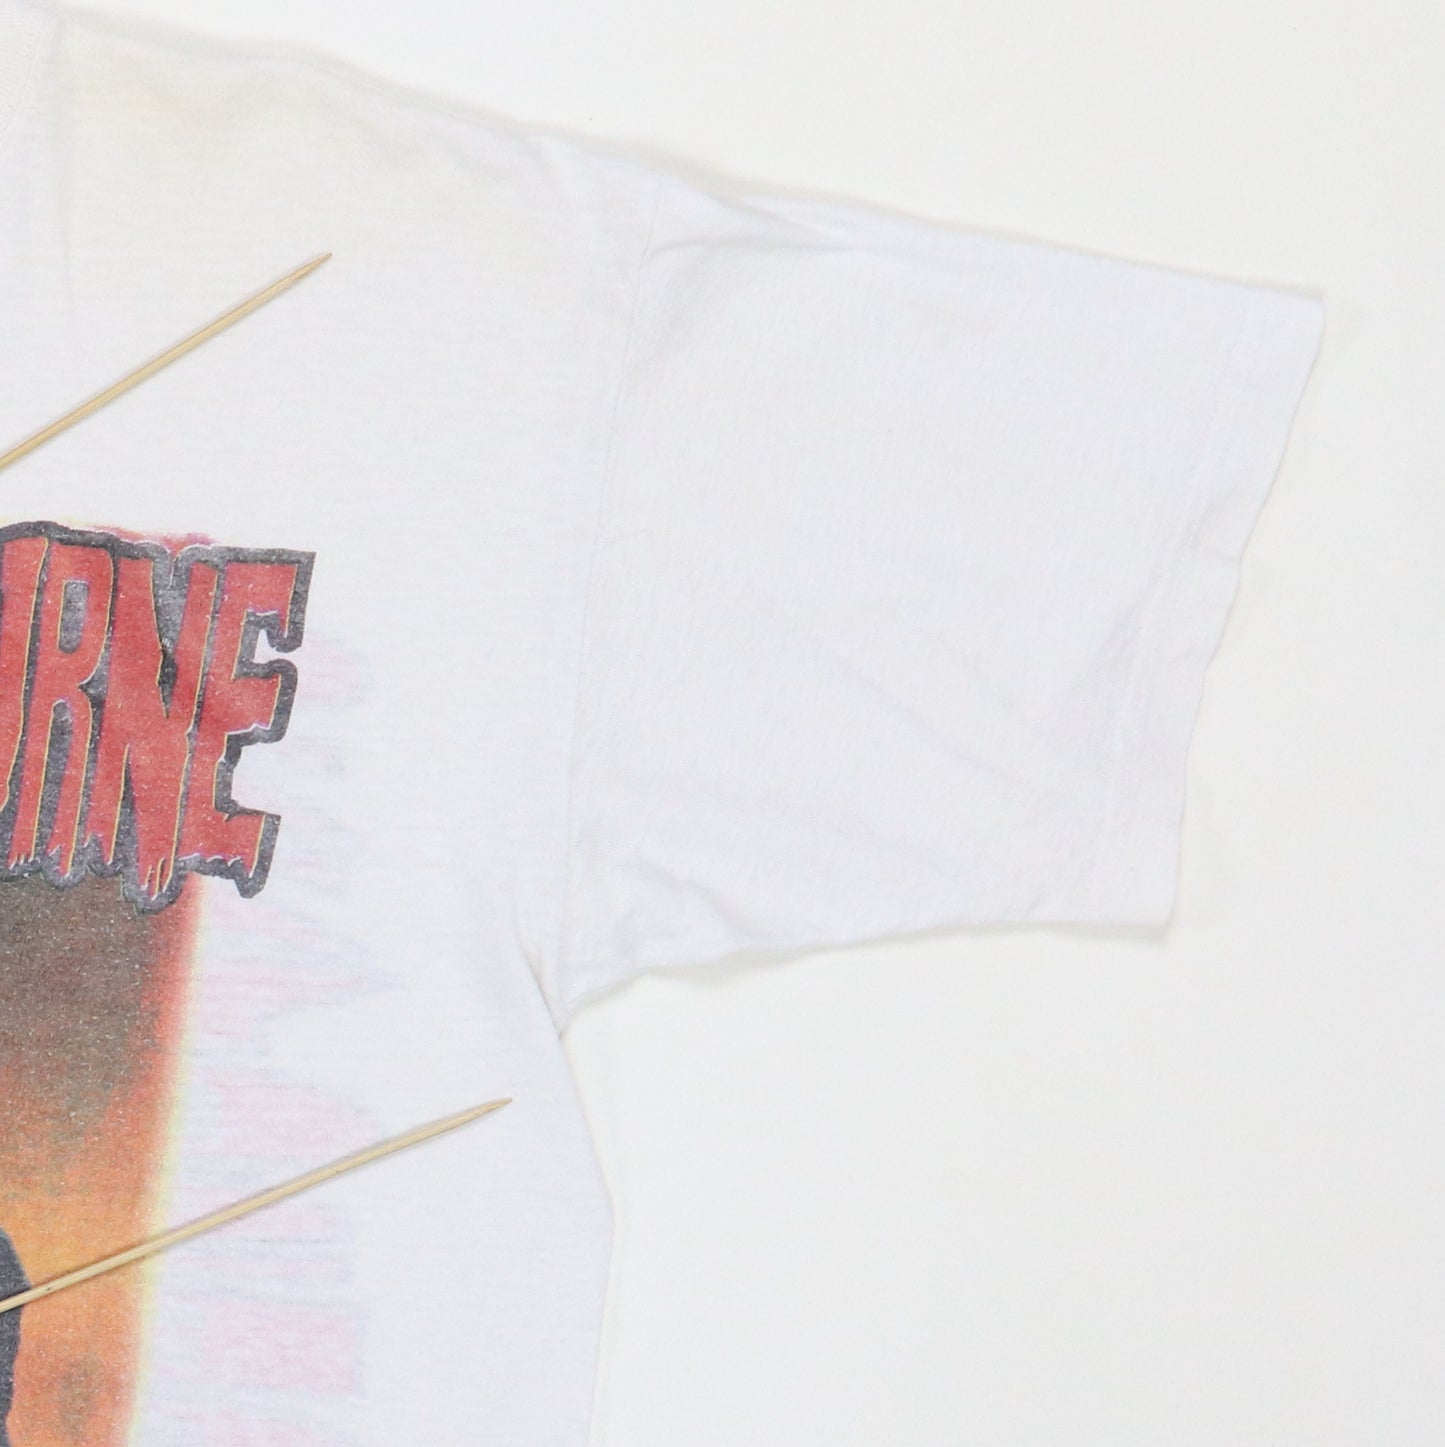 1996 Ozzy Osbourne Retirement Sucks Tour Shirt